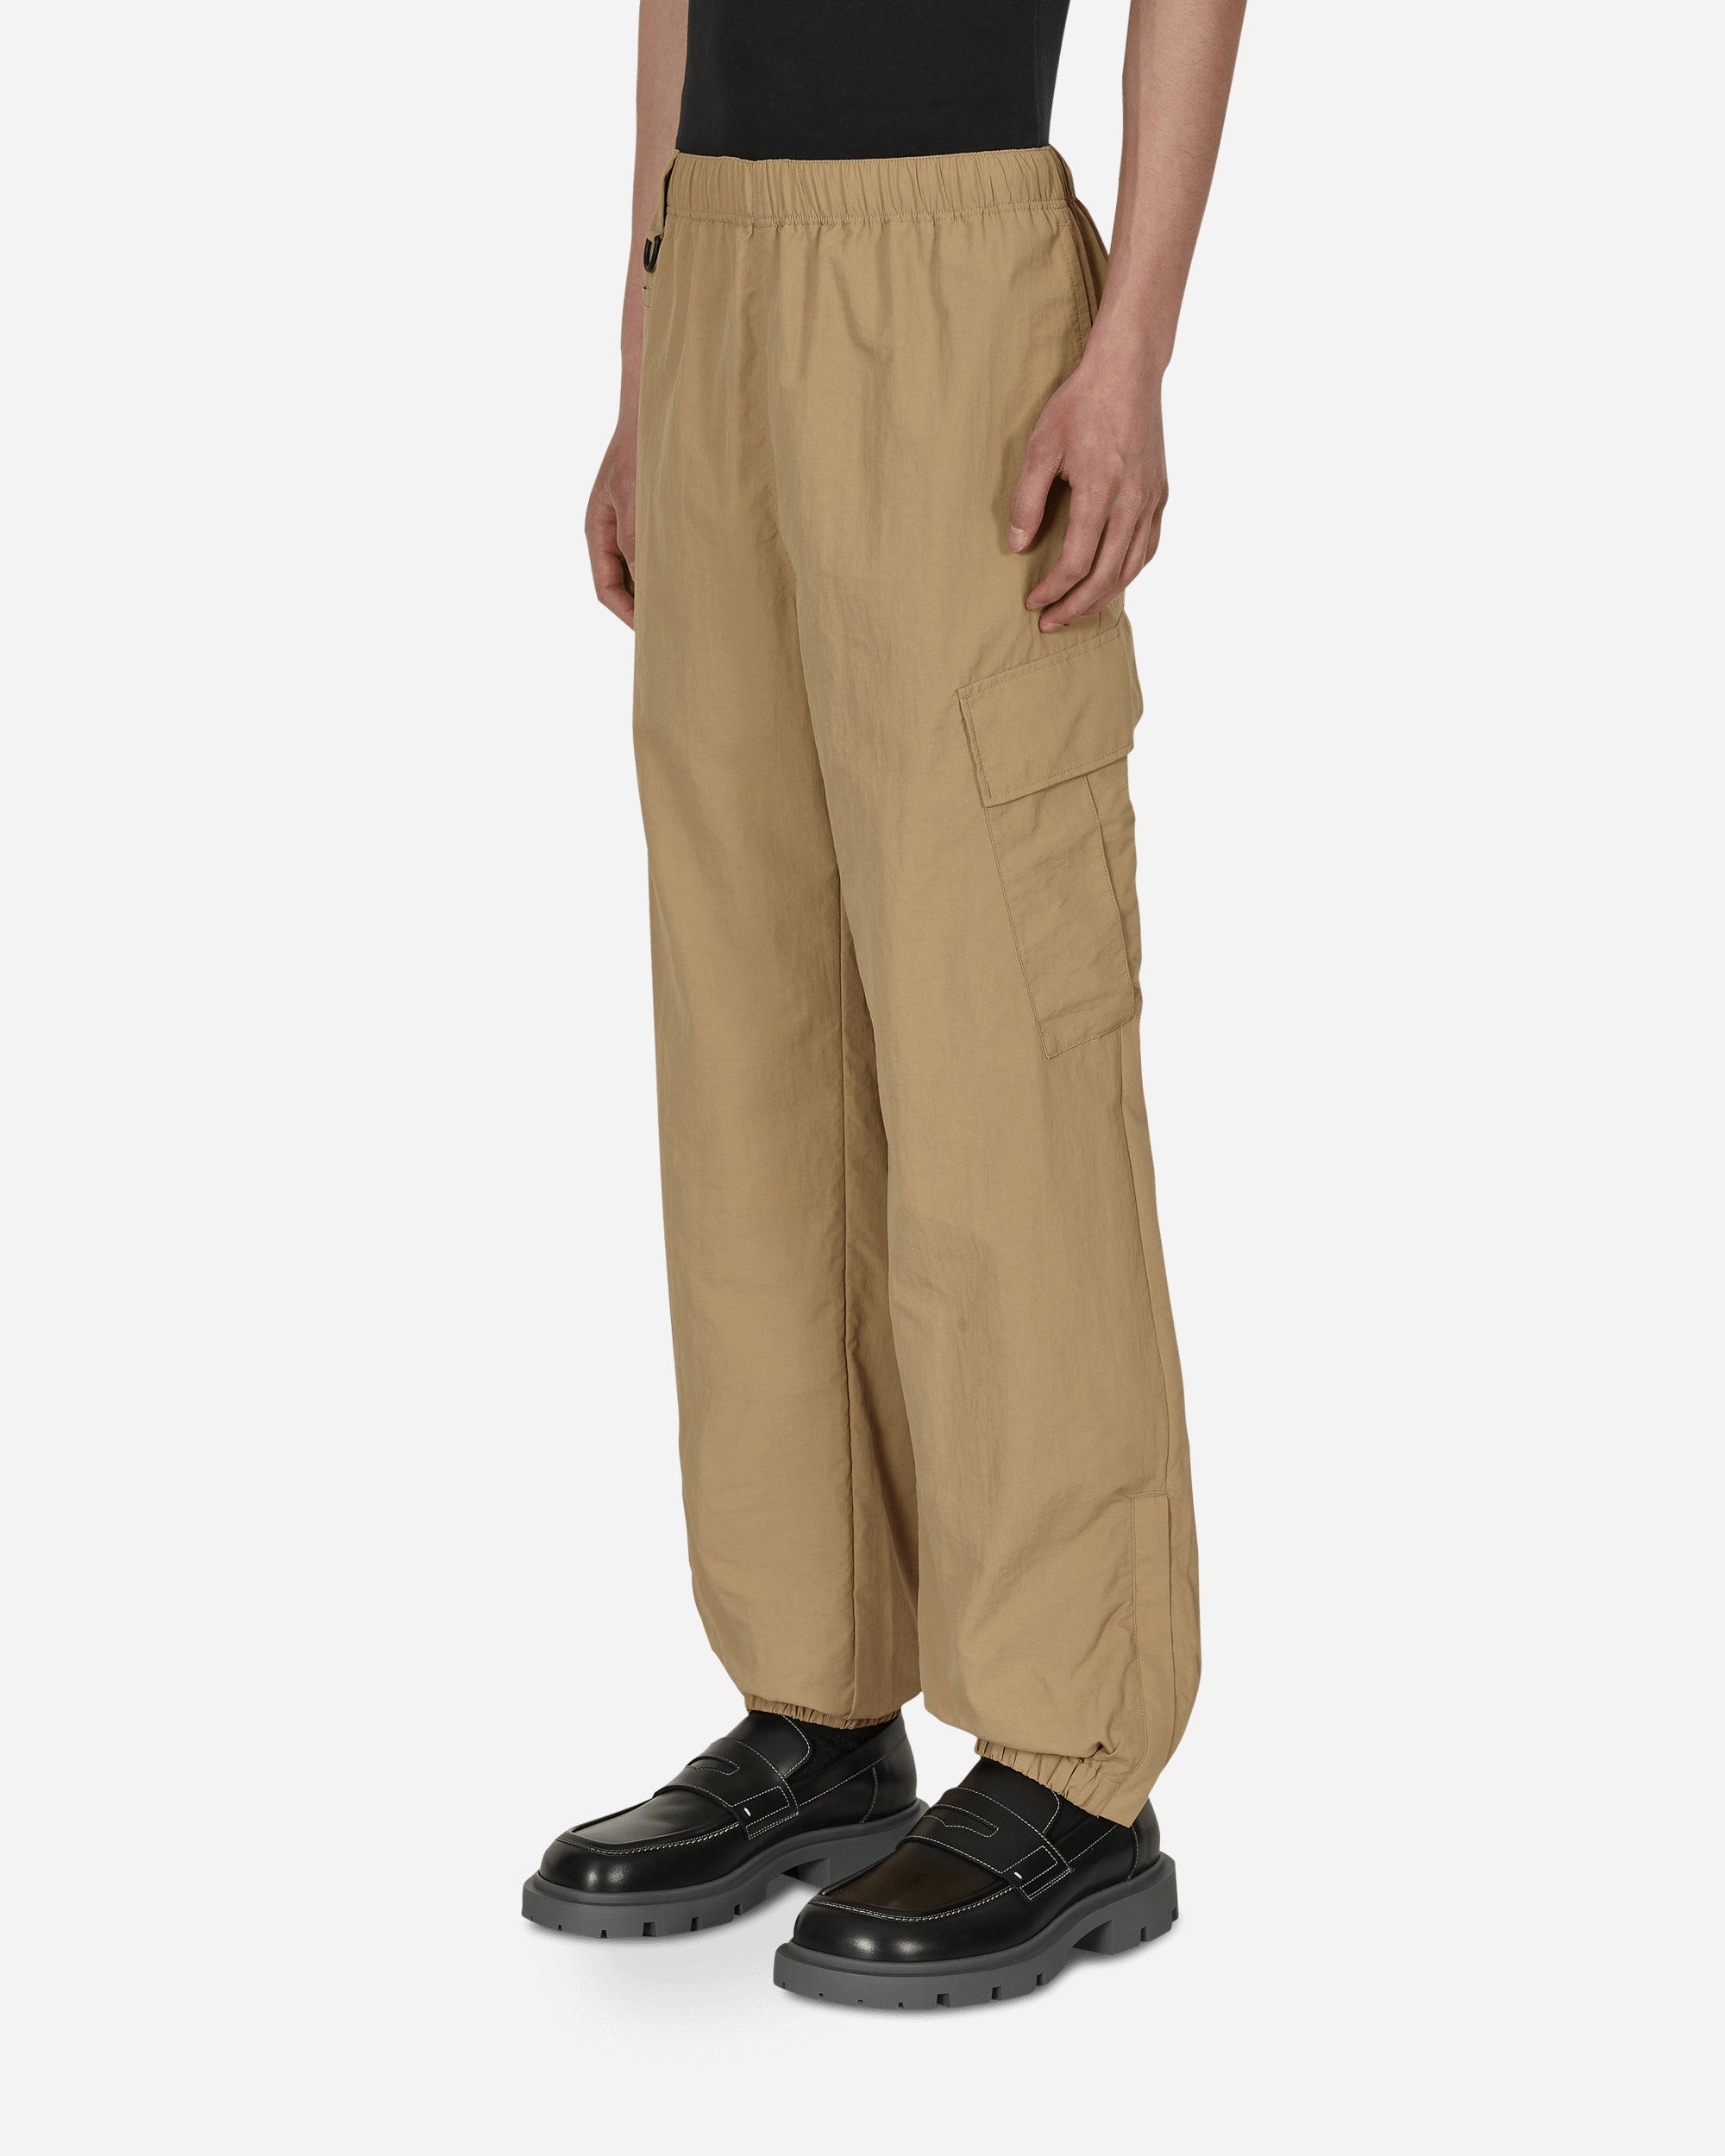 Undercover Pants Beige Pants Trousers UC1B4501-1 BEIGE